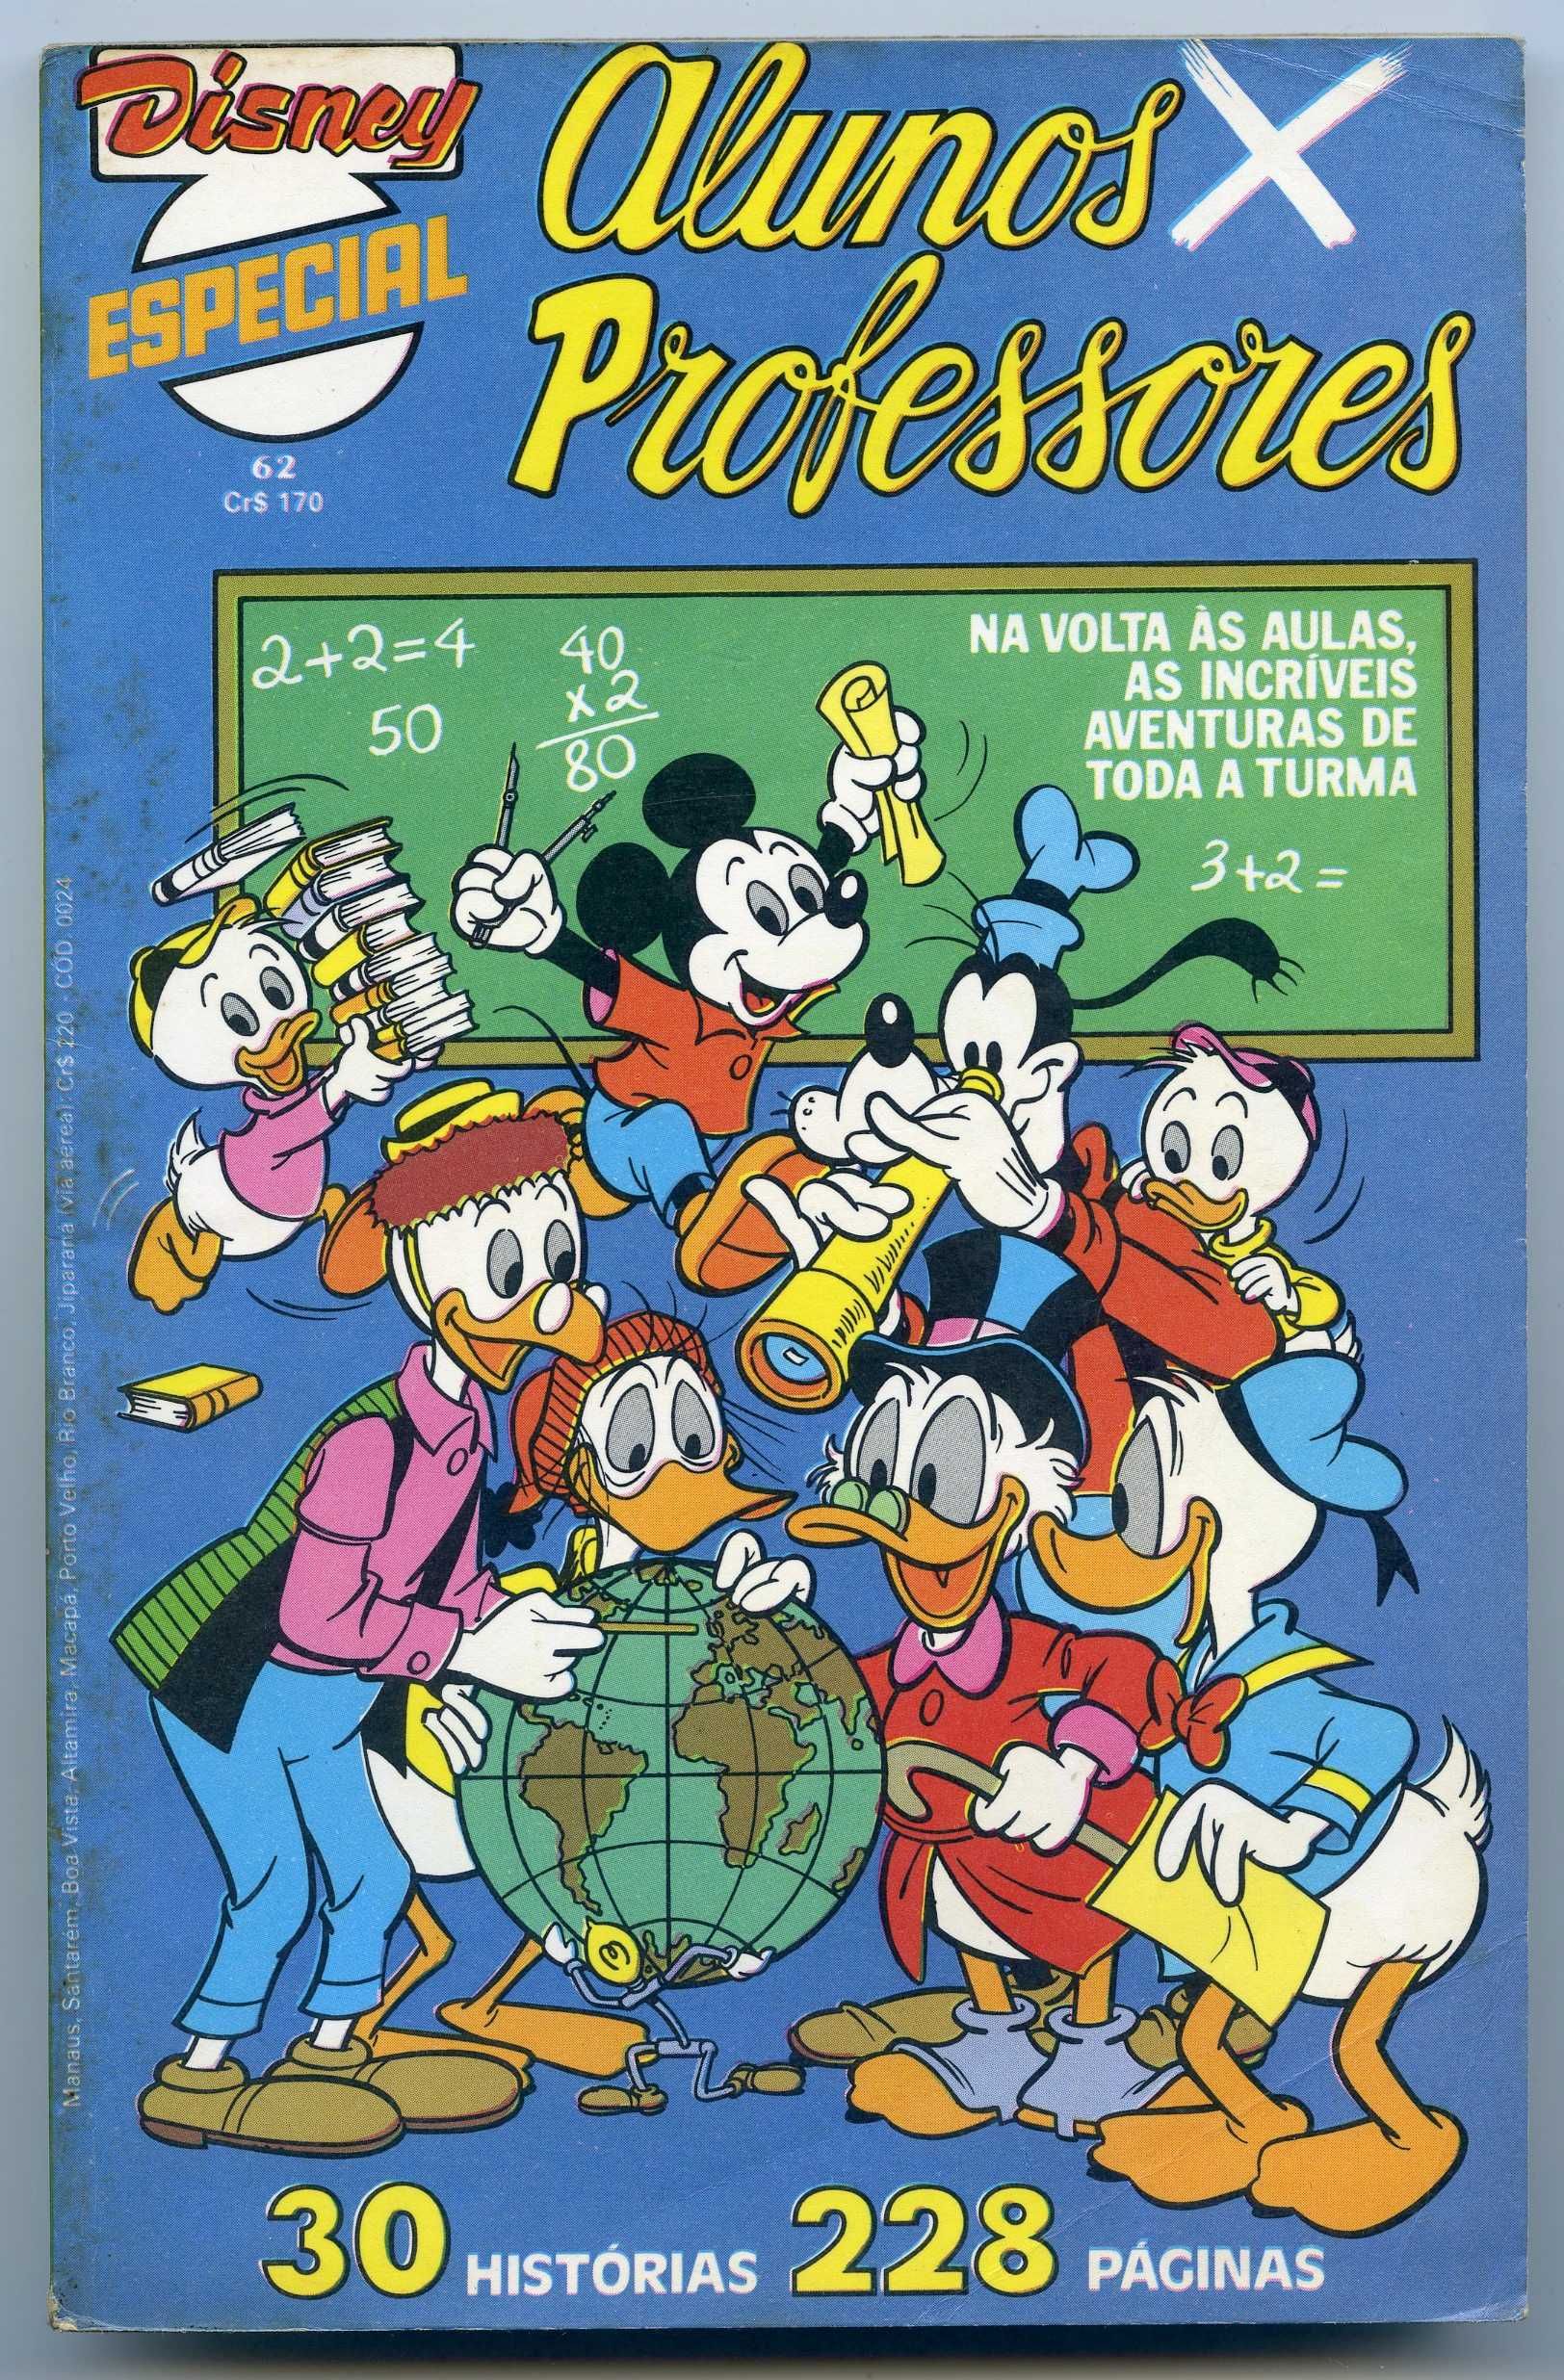 Disney Especial Numero 62 "Alunos e Professores"